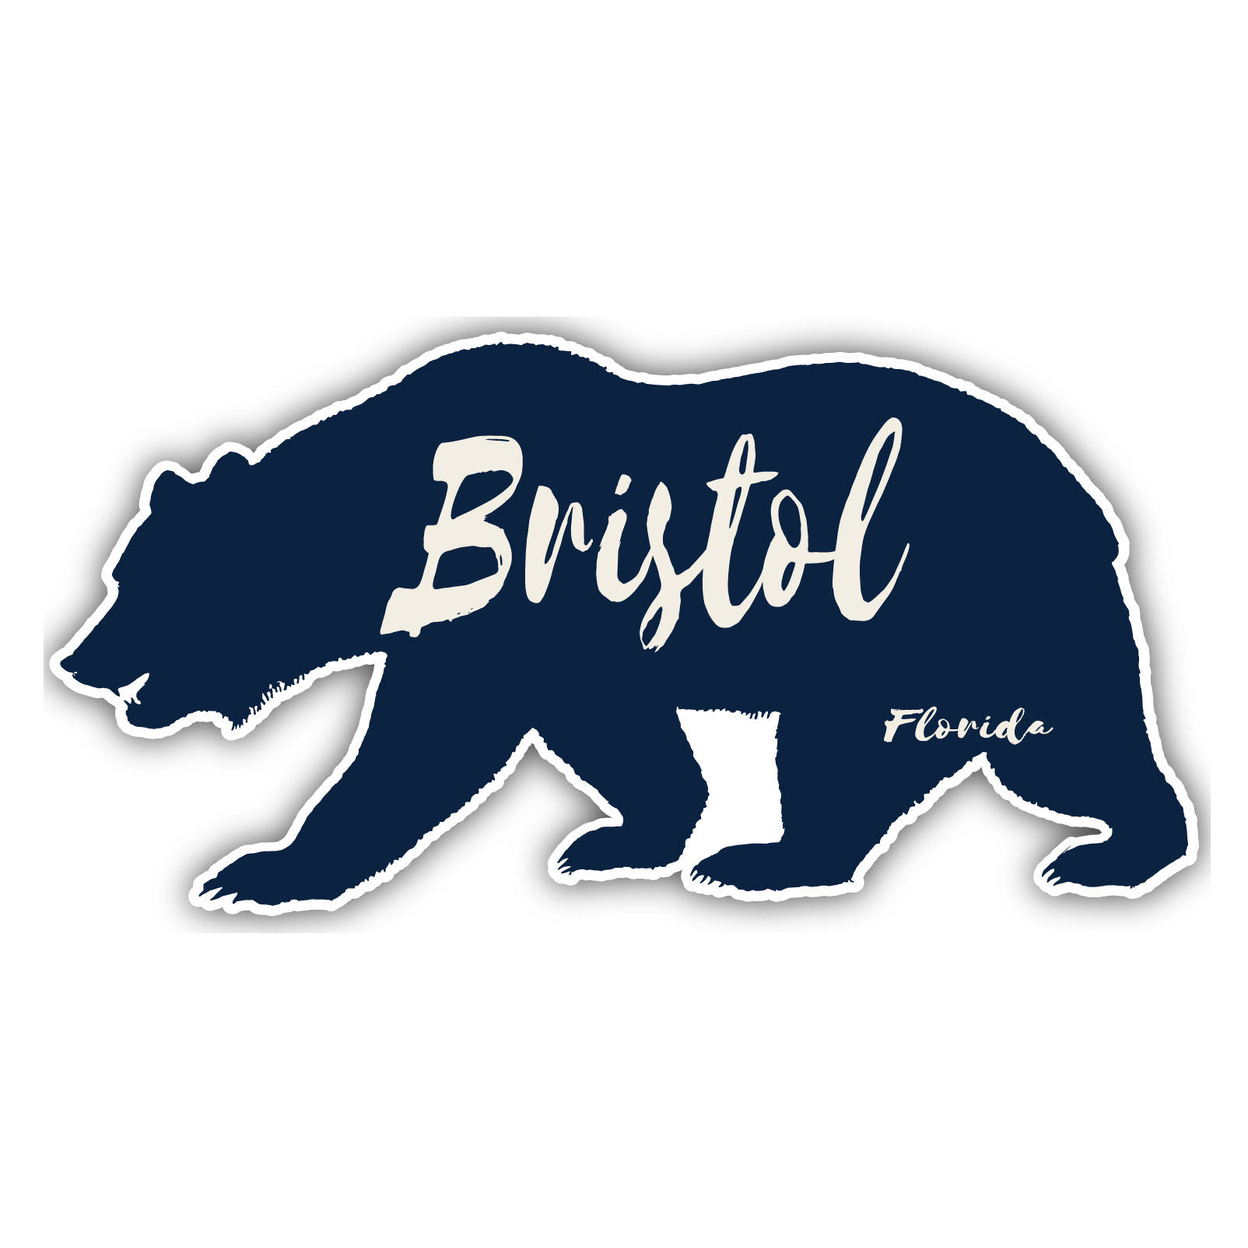 Bristol Florida Souvenir Decorative Stickers (Choose Theme And Size) - Single Unit, 6-Inch, Bear